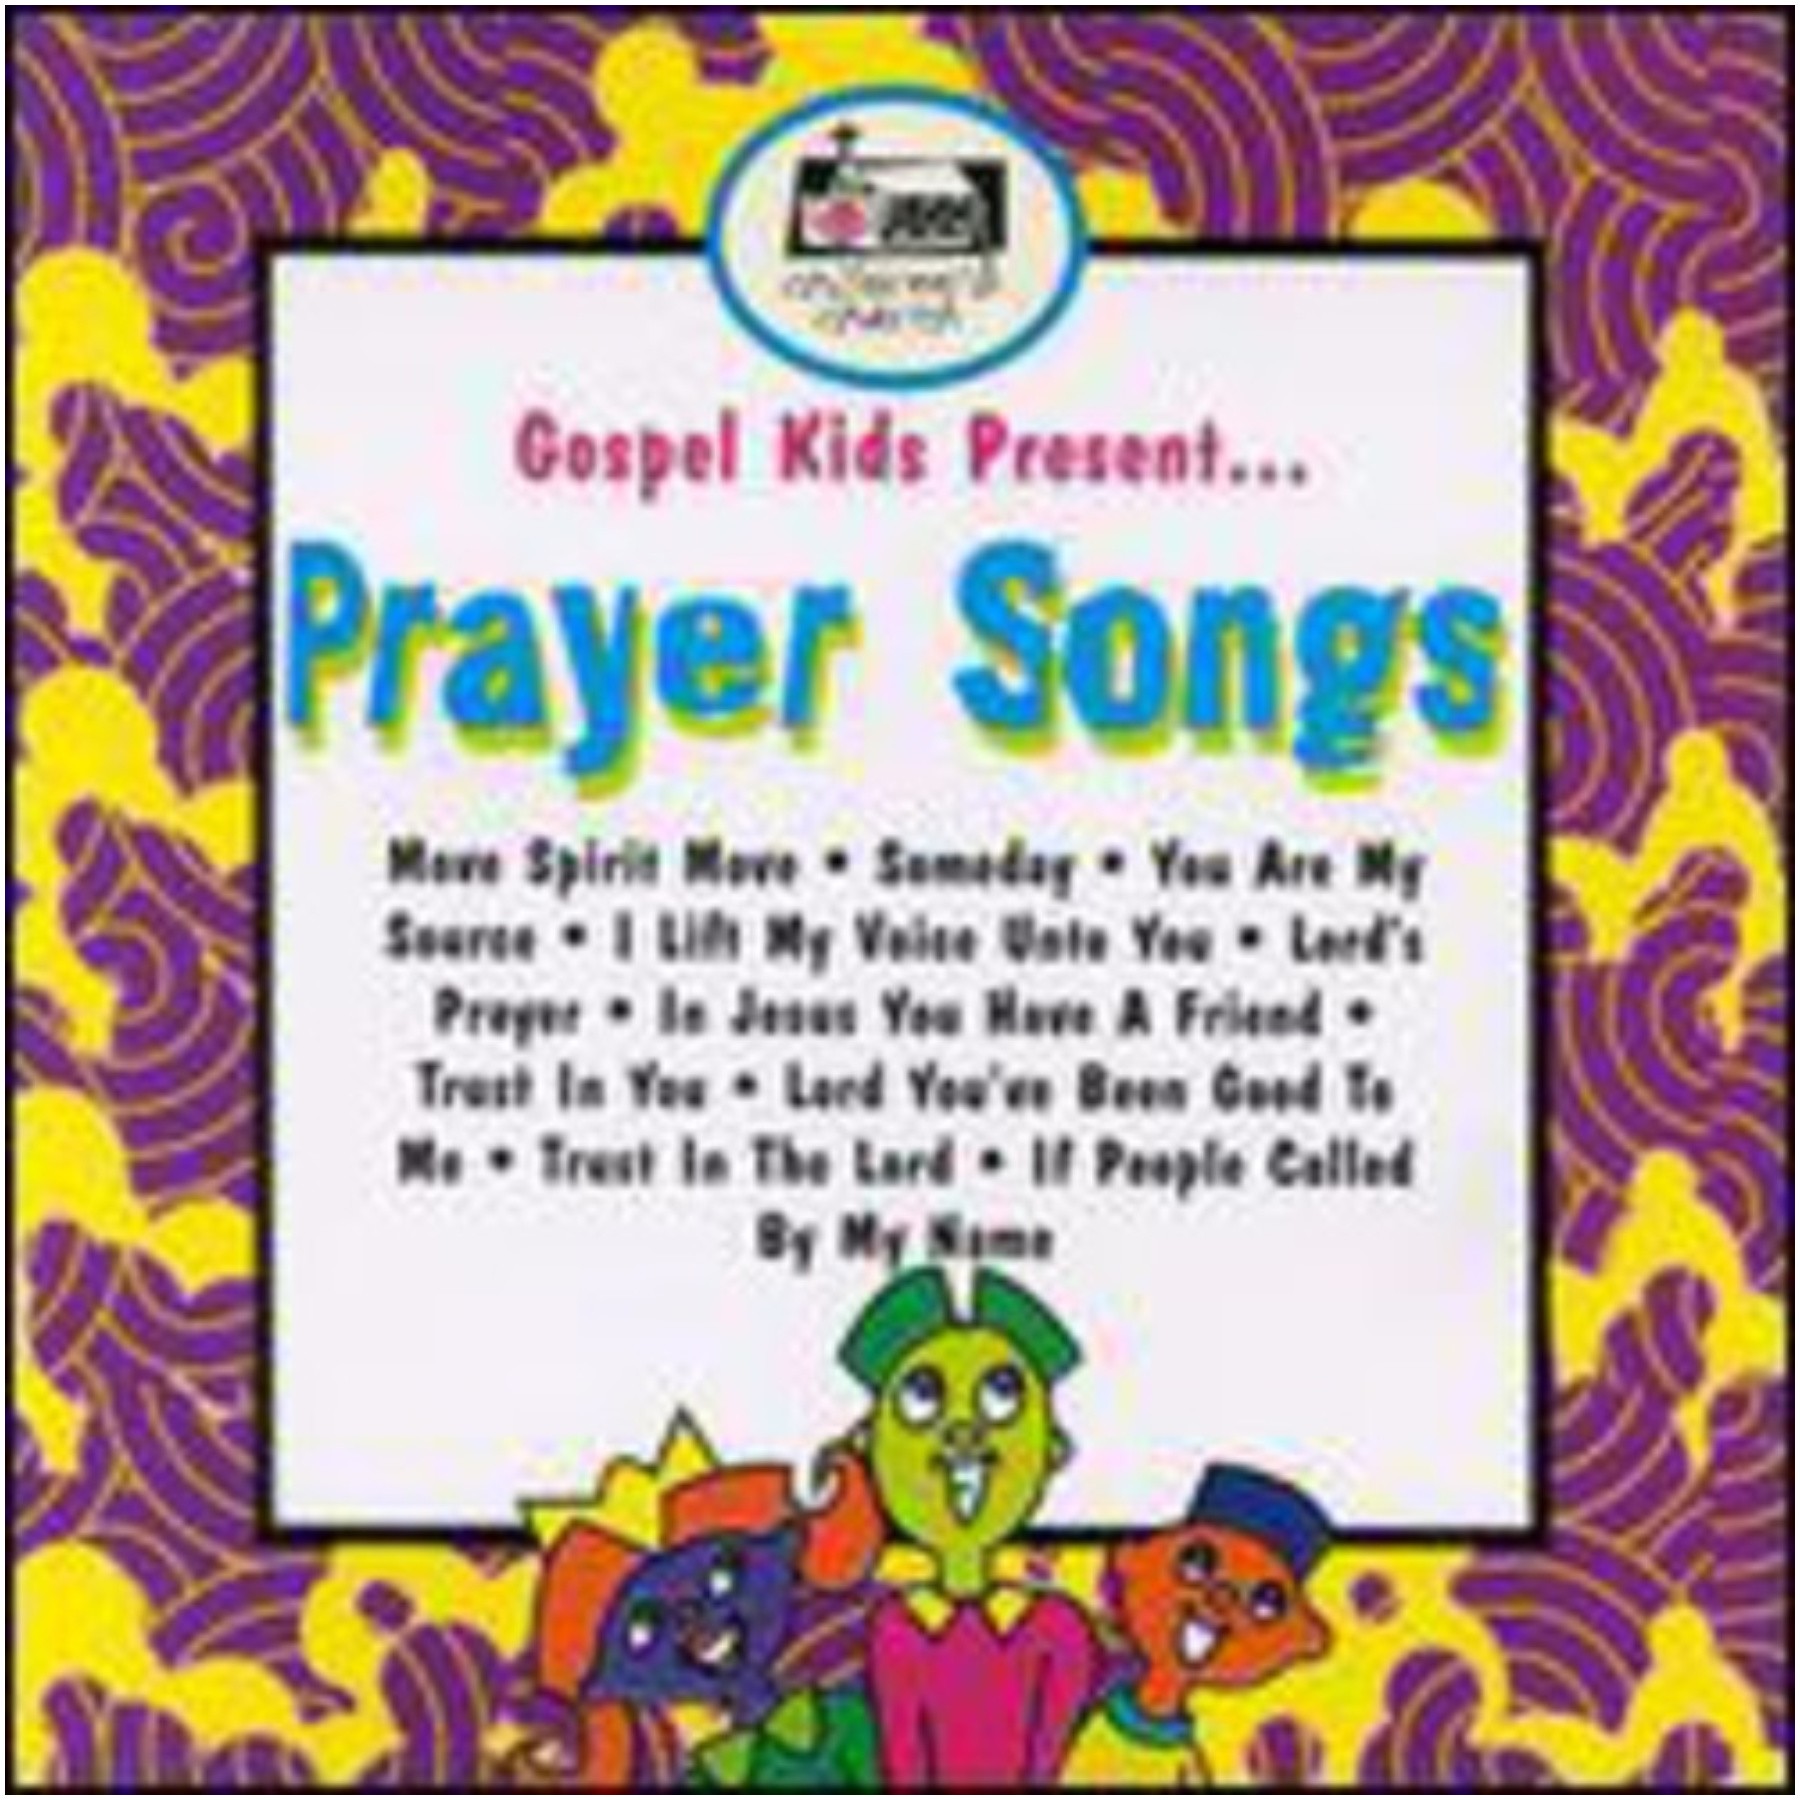 Prayer songs